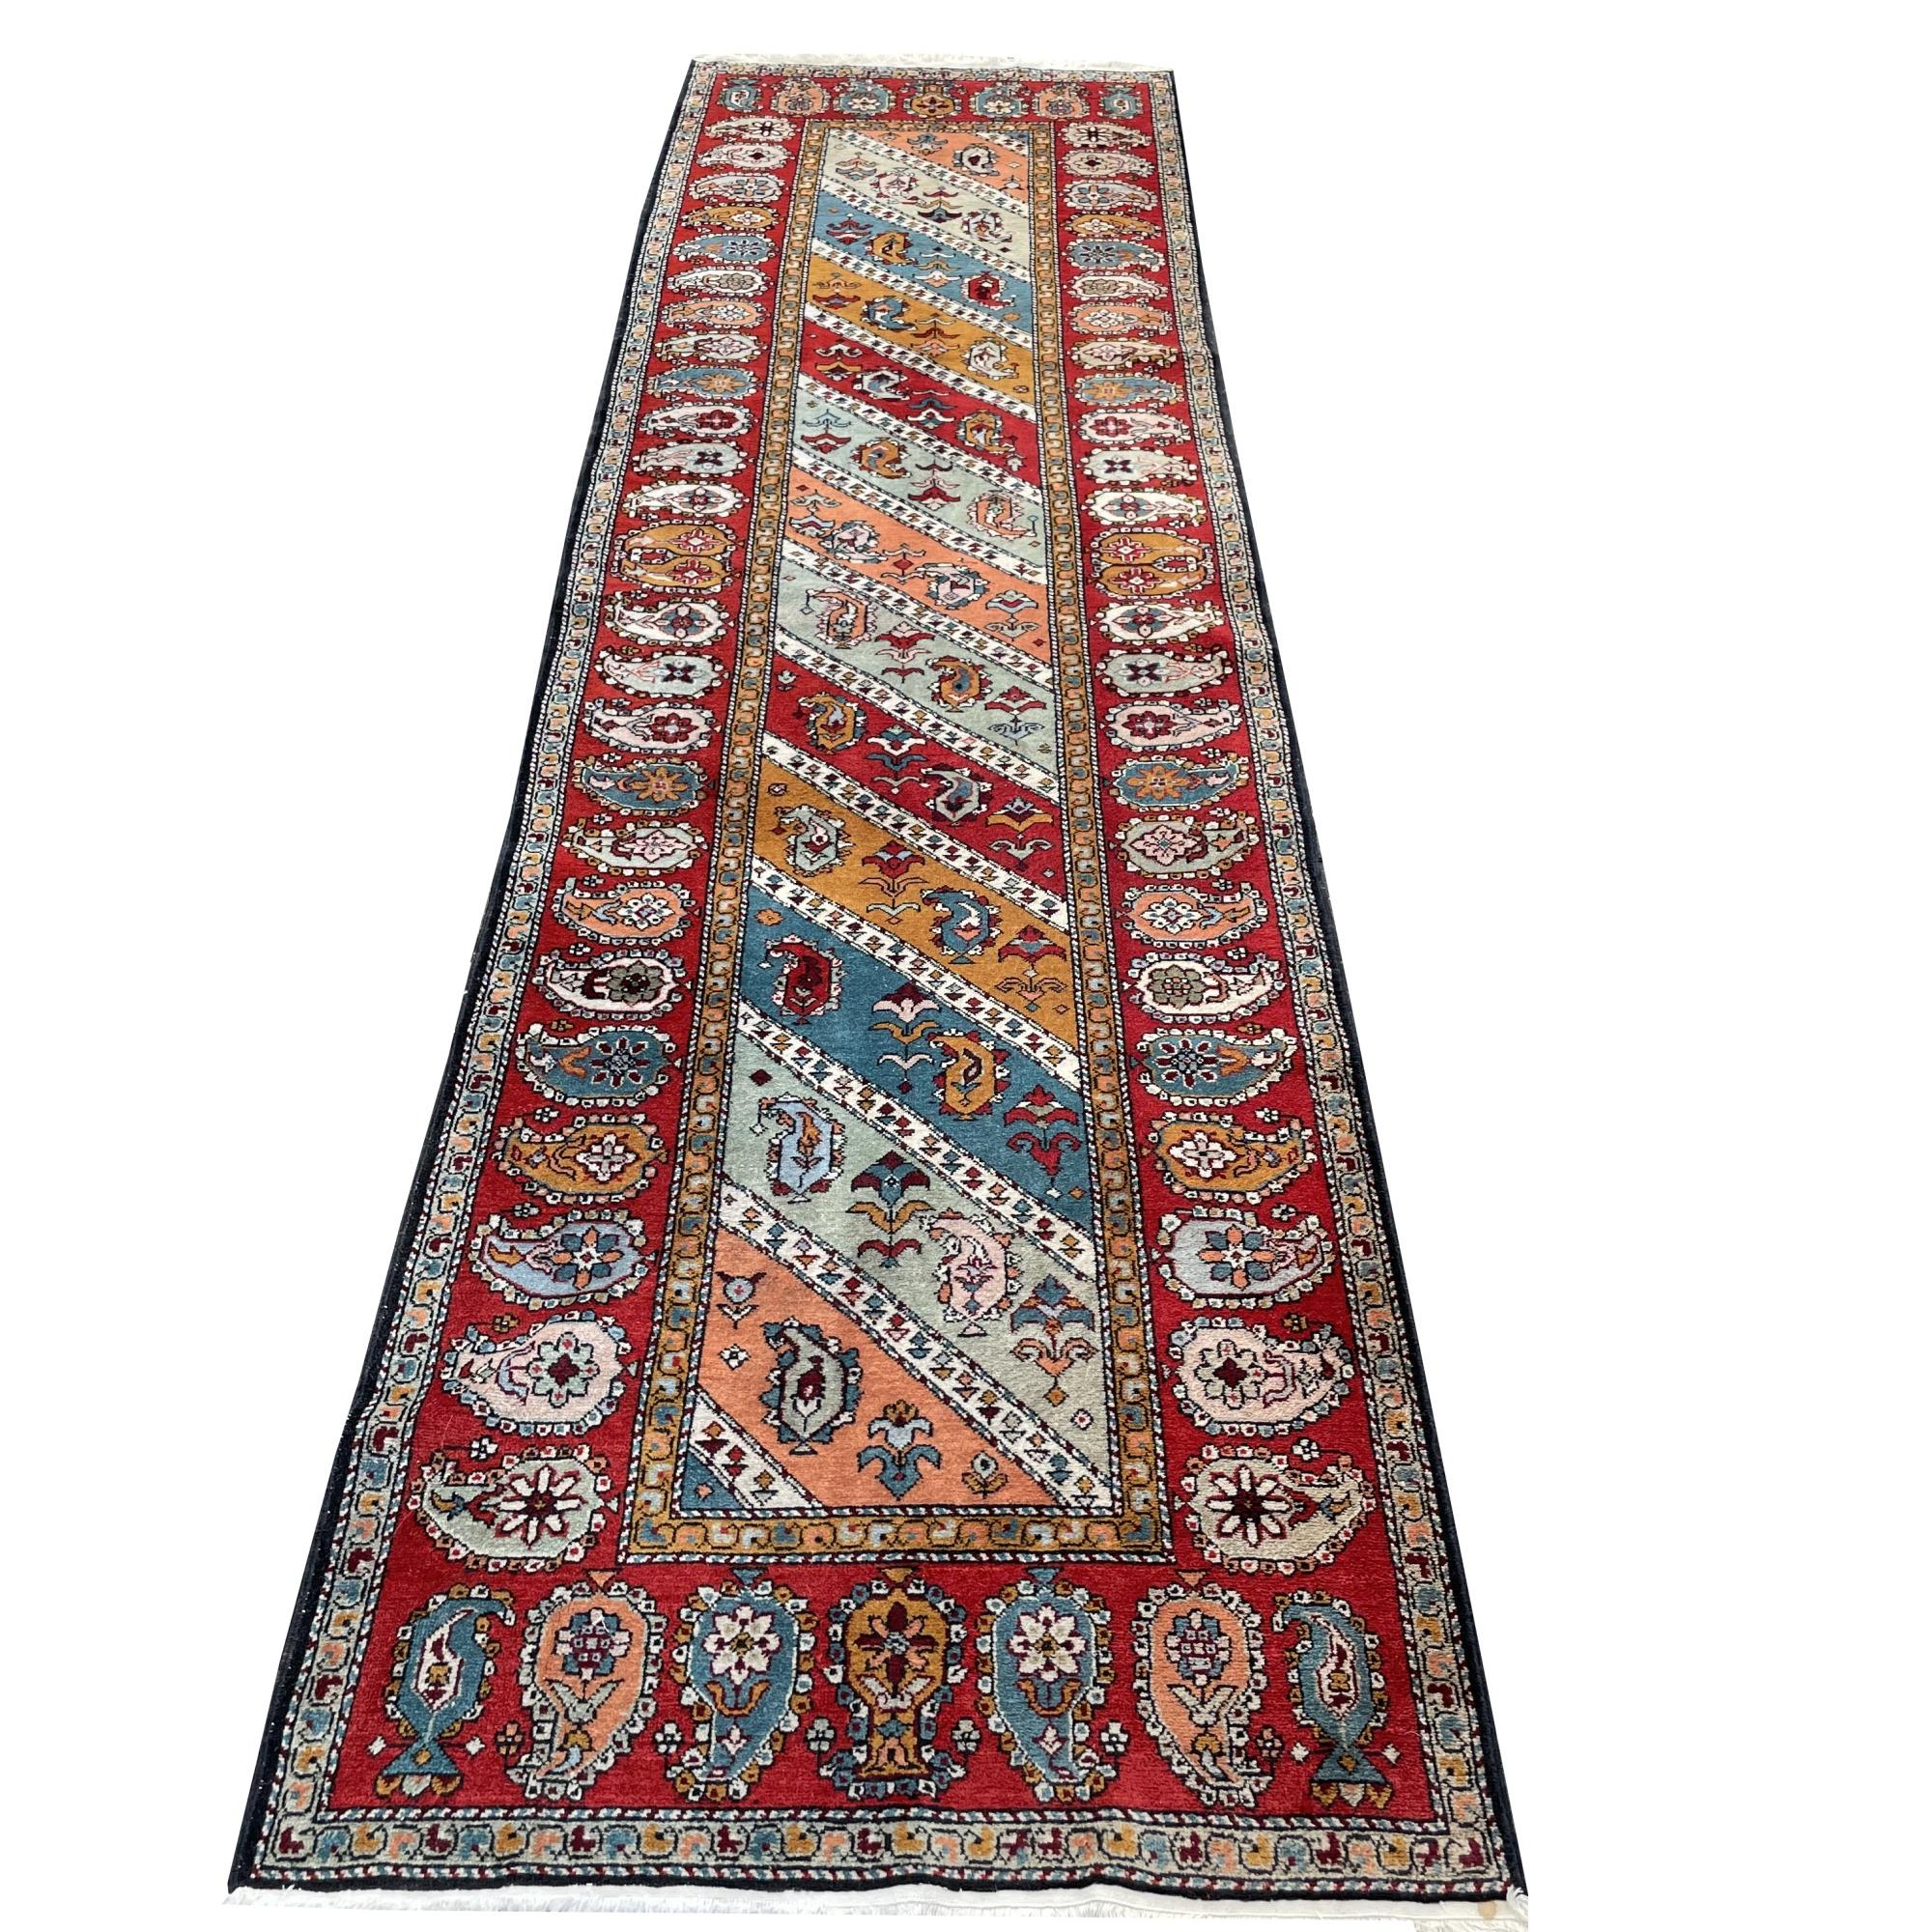 Beautiful semi antique Shirvan vintage rug Azerbeijan 11 x 3 ft / 344 x 92 cm Bohemian carpet red, green, beige, blue, gray - midcentury

• Beautiful vintage rug 1960s mid-century
• All handmade
• Pile pure wool, warp and weft cotton
•